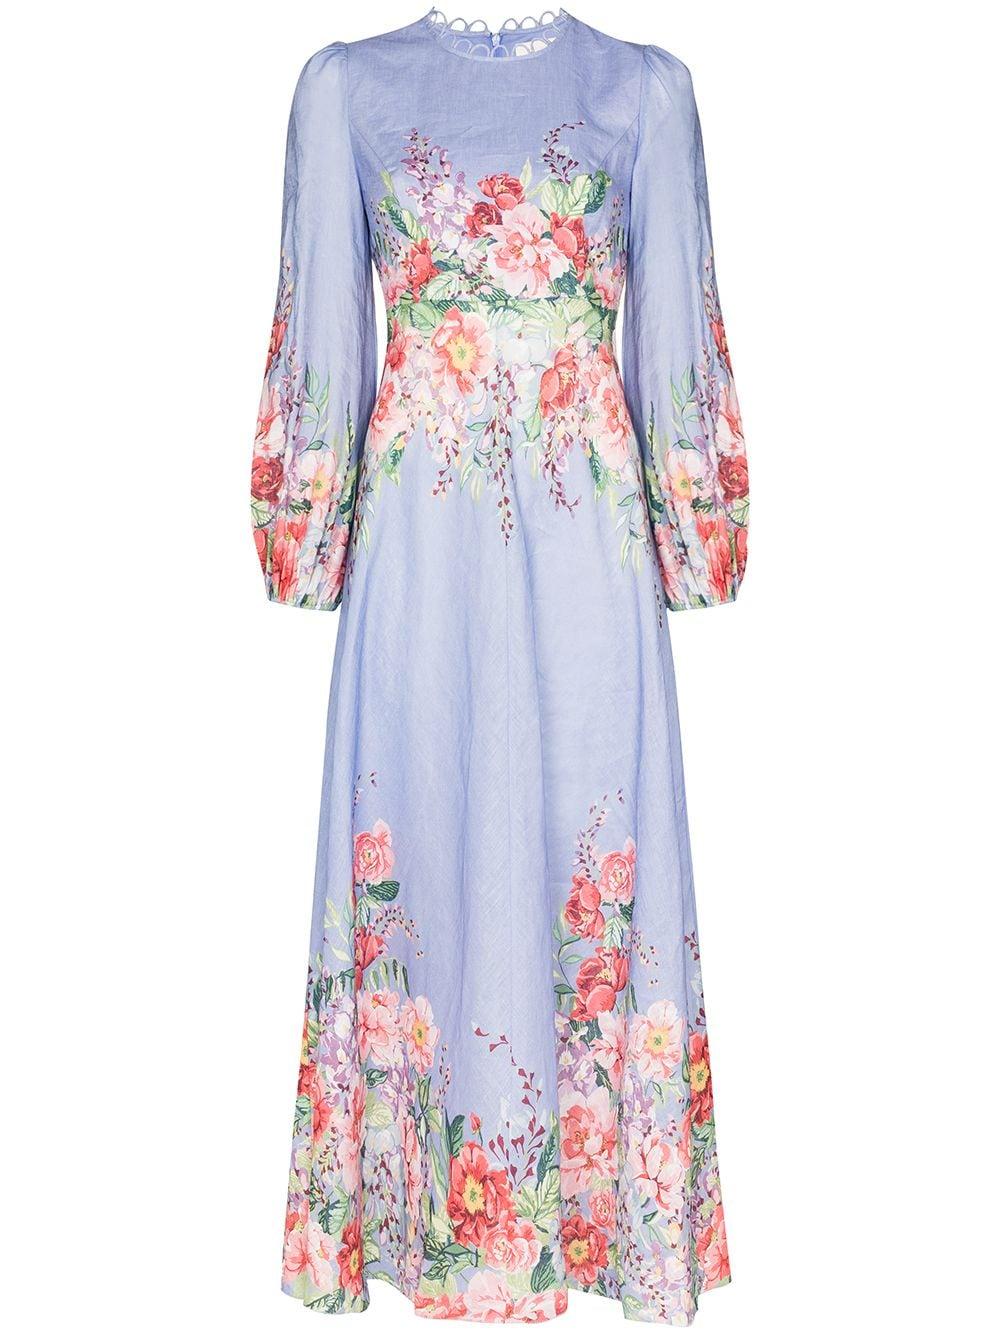 Zimmermann Bellitude Floral-print Dress in Blue - Lyst